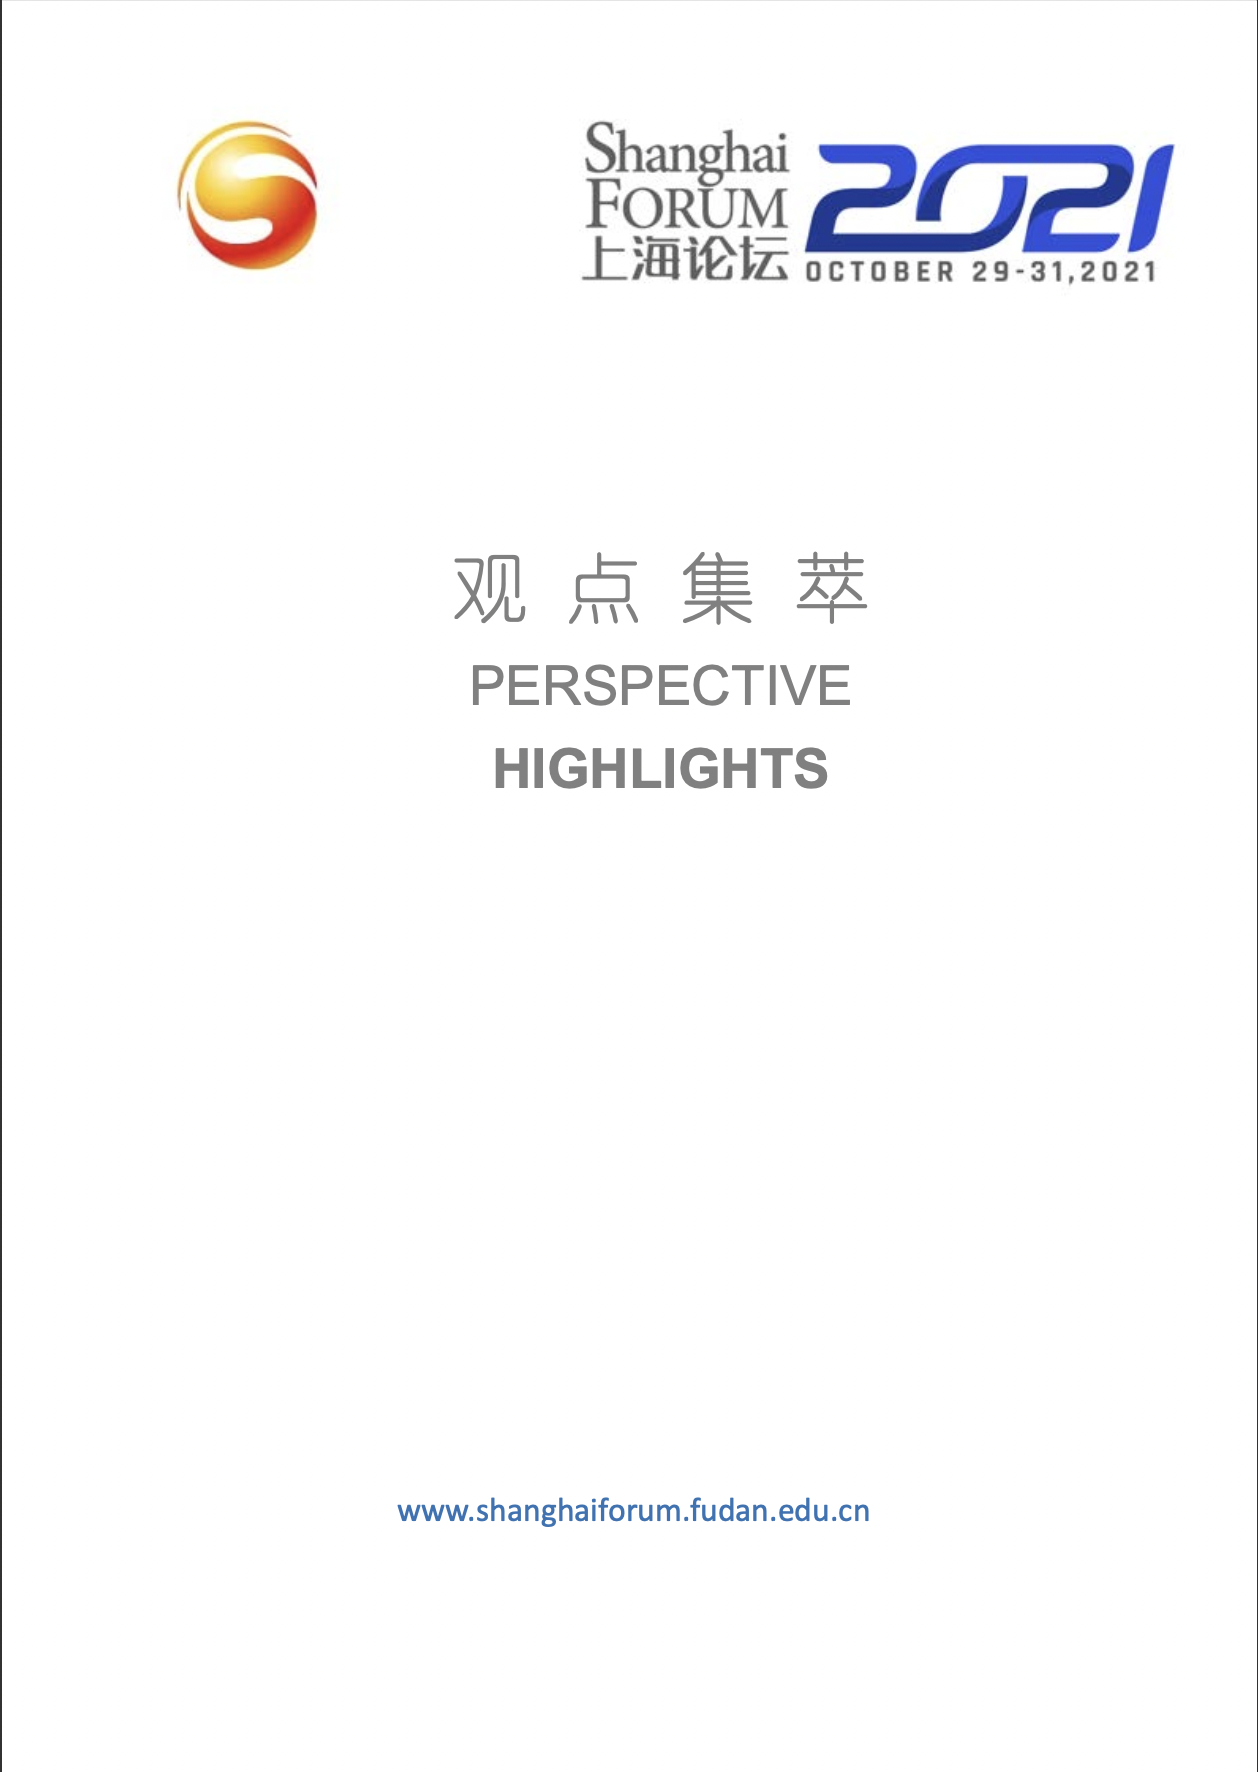 Shanghai Forum 2021 Perspective Highlights